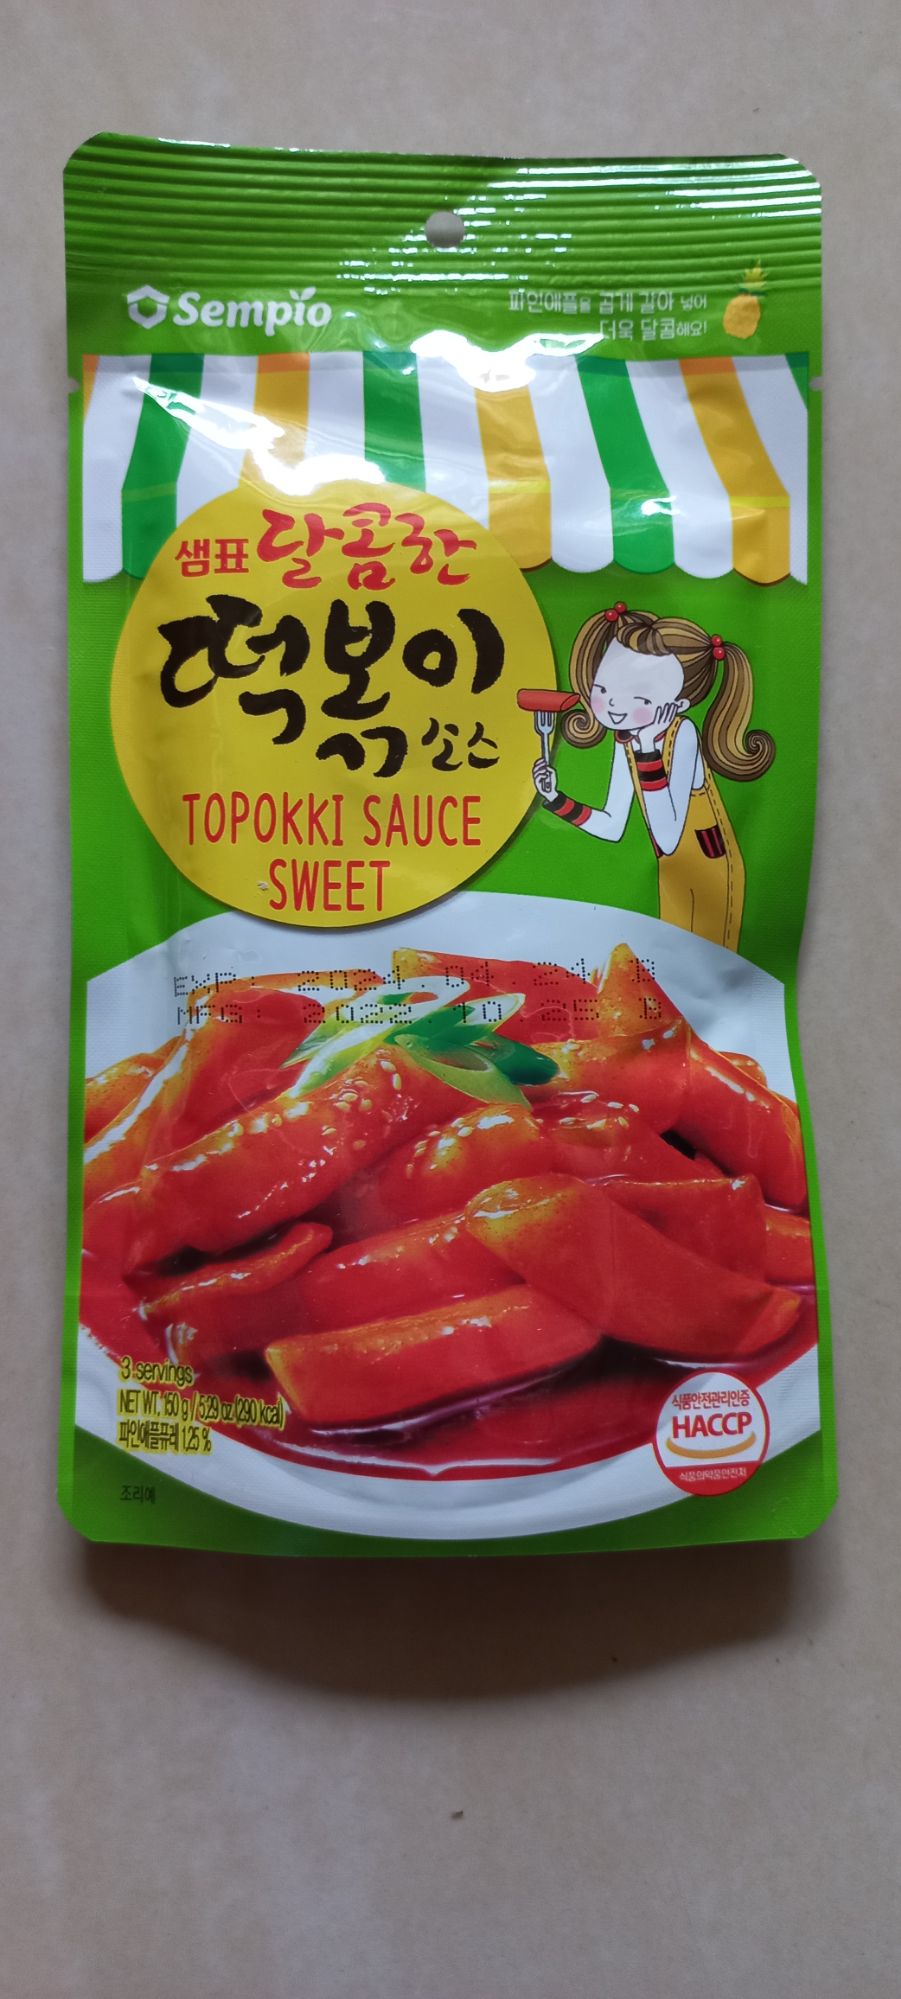 Sempio sweet topokki sauce 150gr